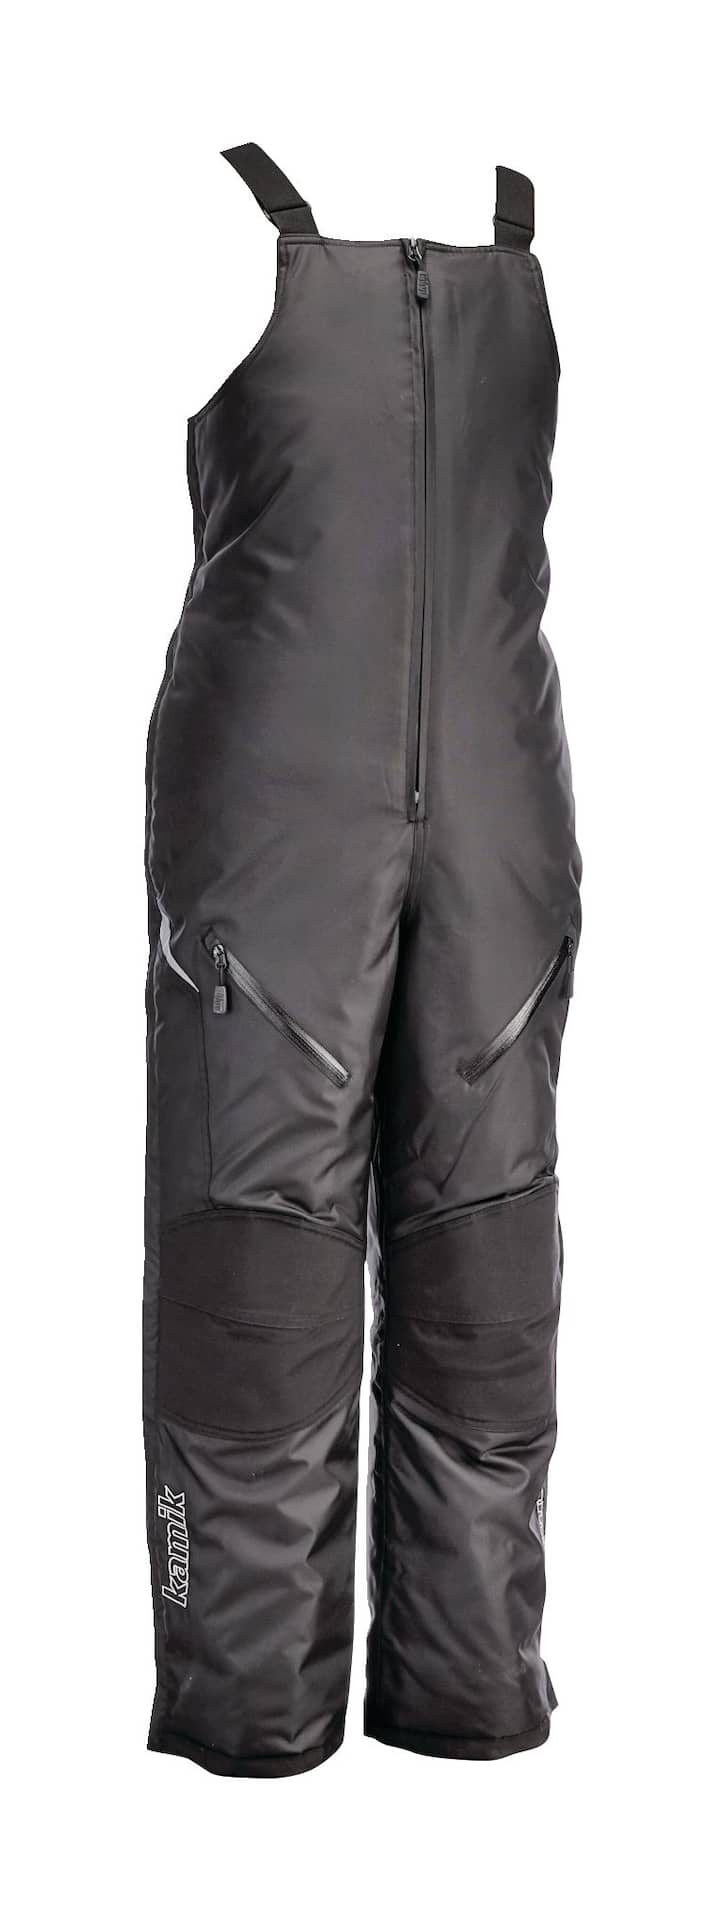 Black snow bibs, pants, lightweight, water, wind full length pants for M 